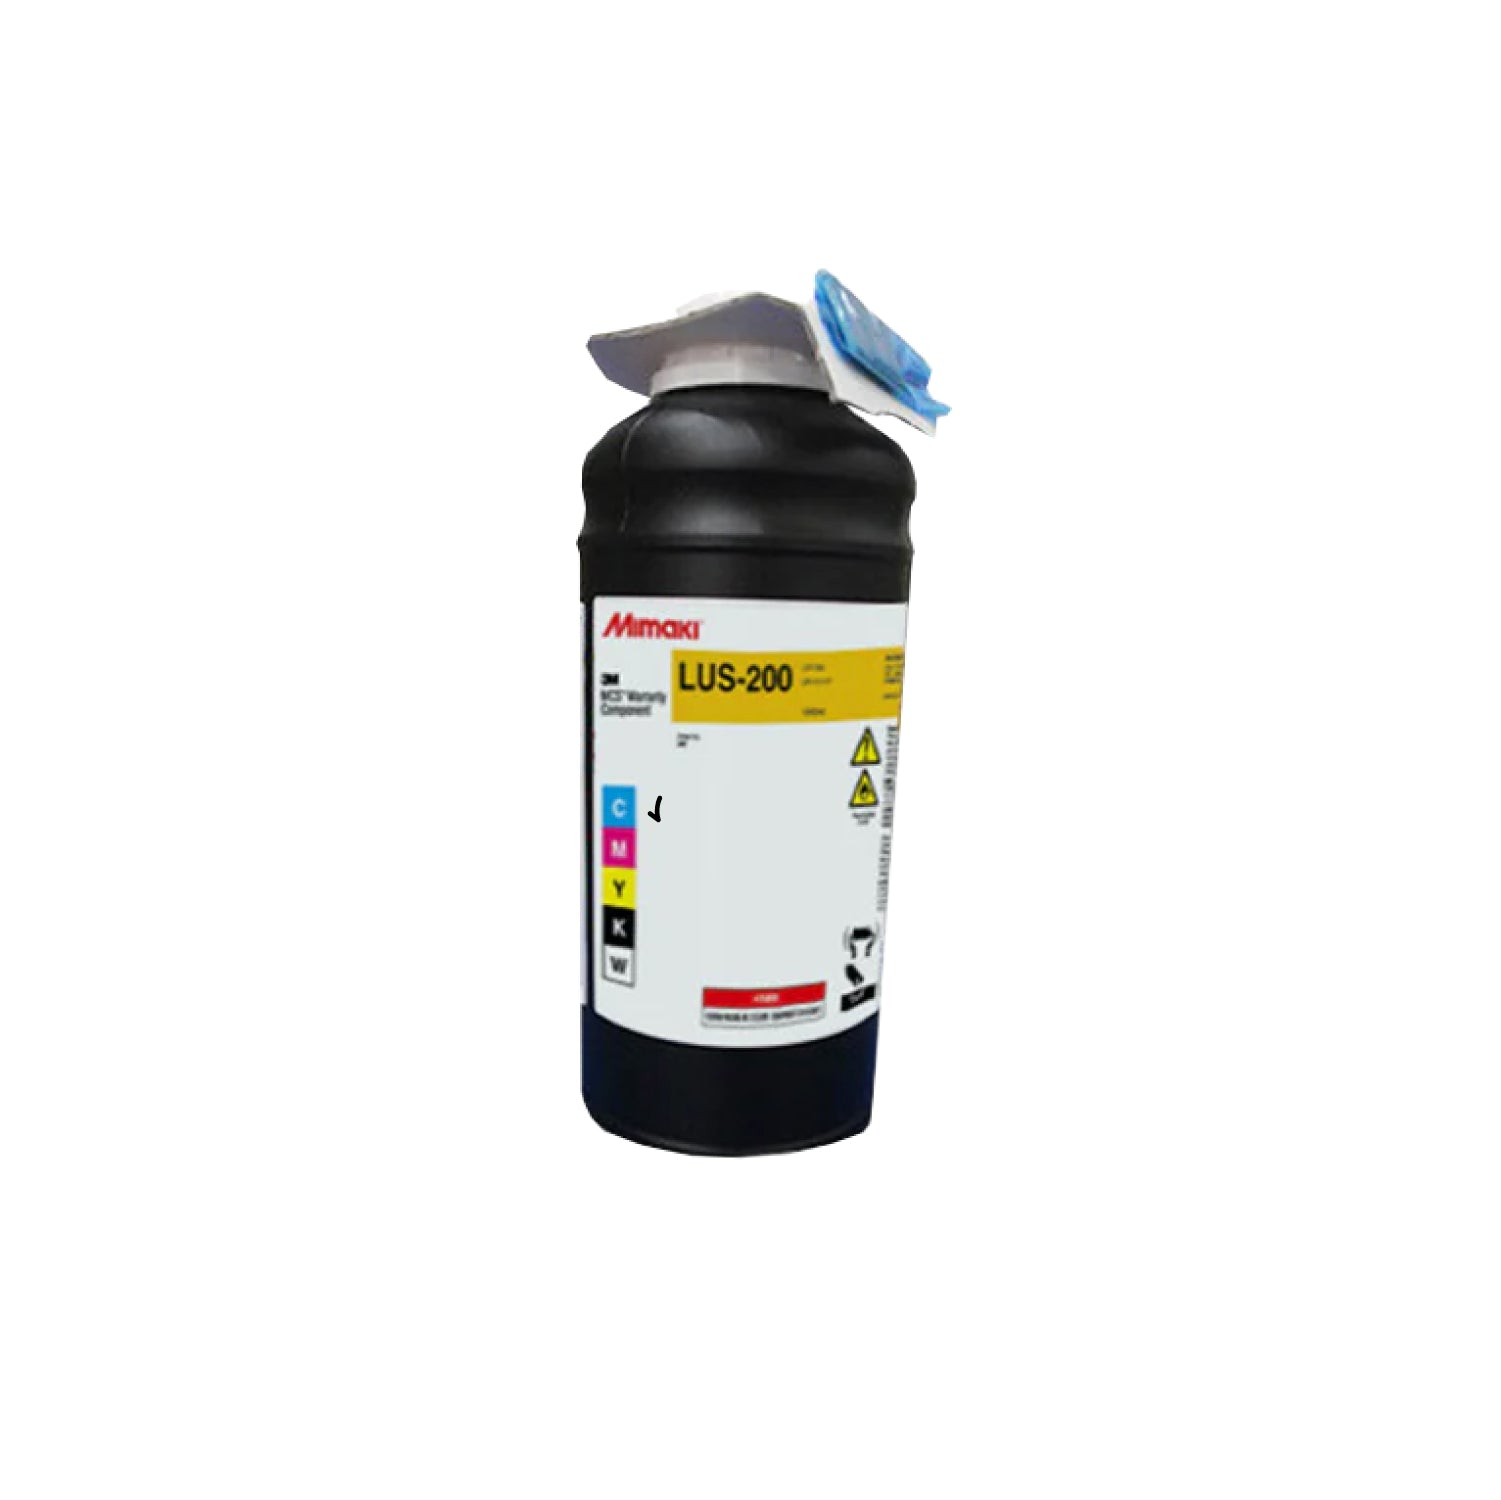 A 1000ml bottle of cyan LUS-200 Mimaki UV ink